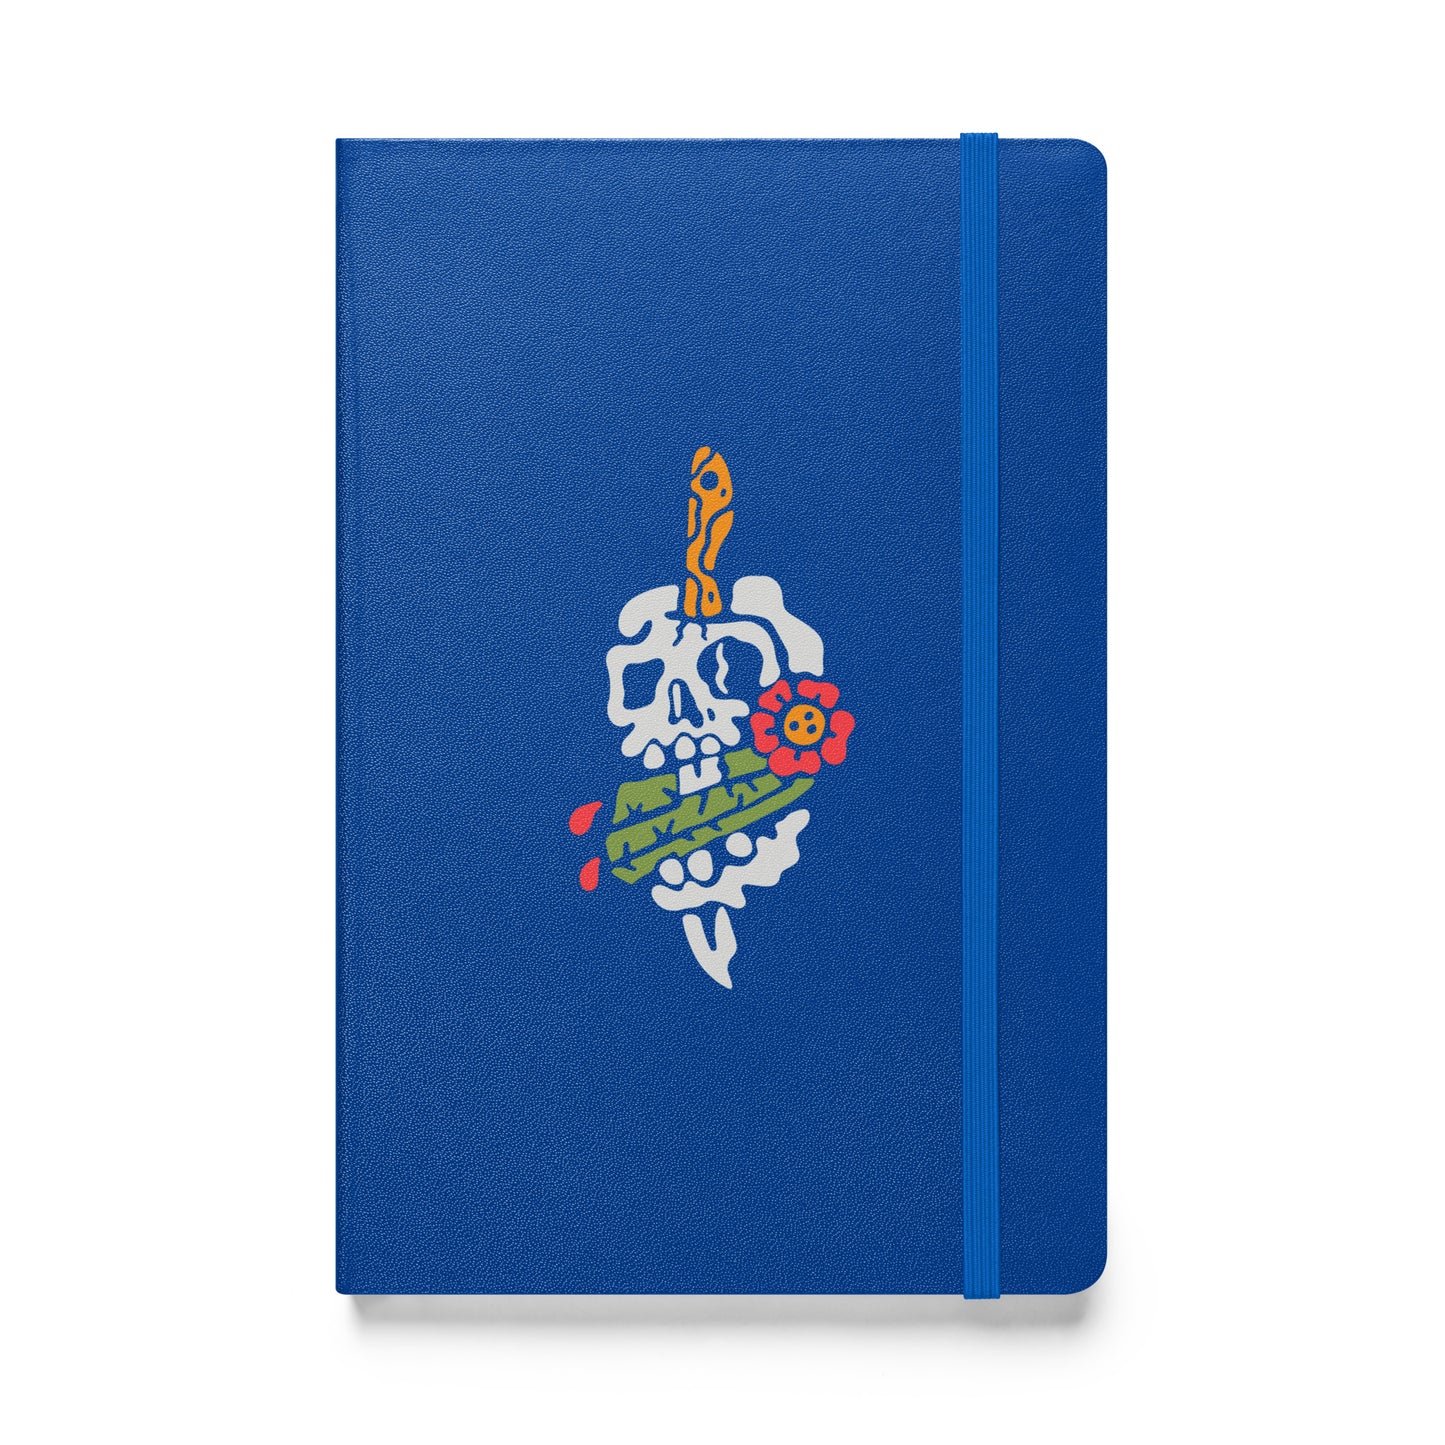 Tricho Skull Notizbuch mit Hardcover-Einband 